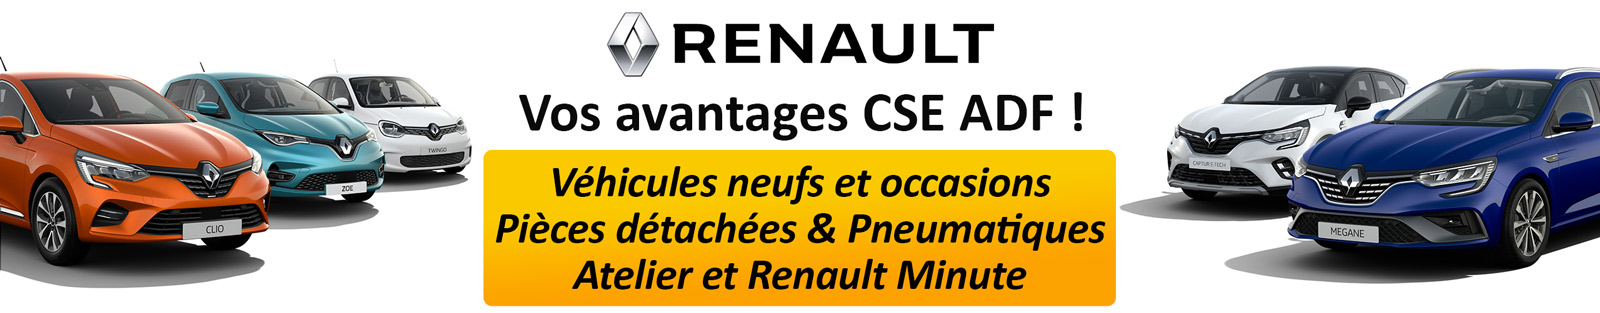 Renault remises